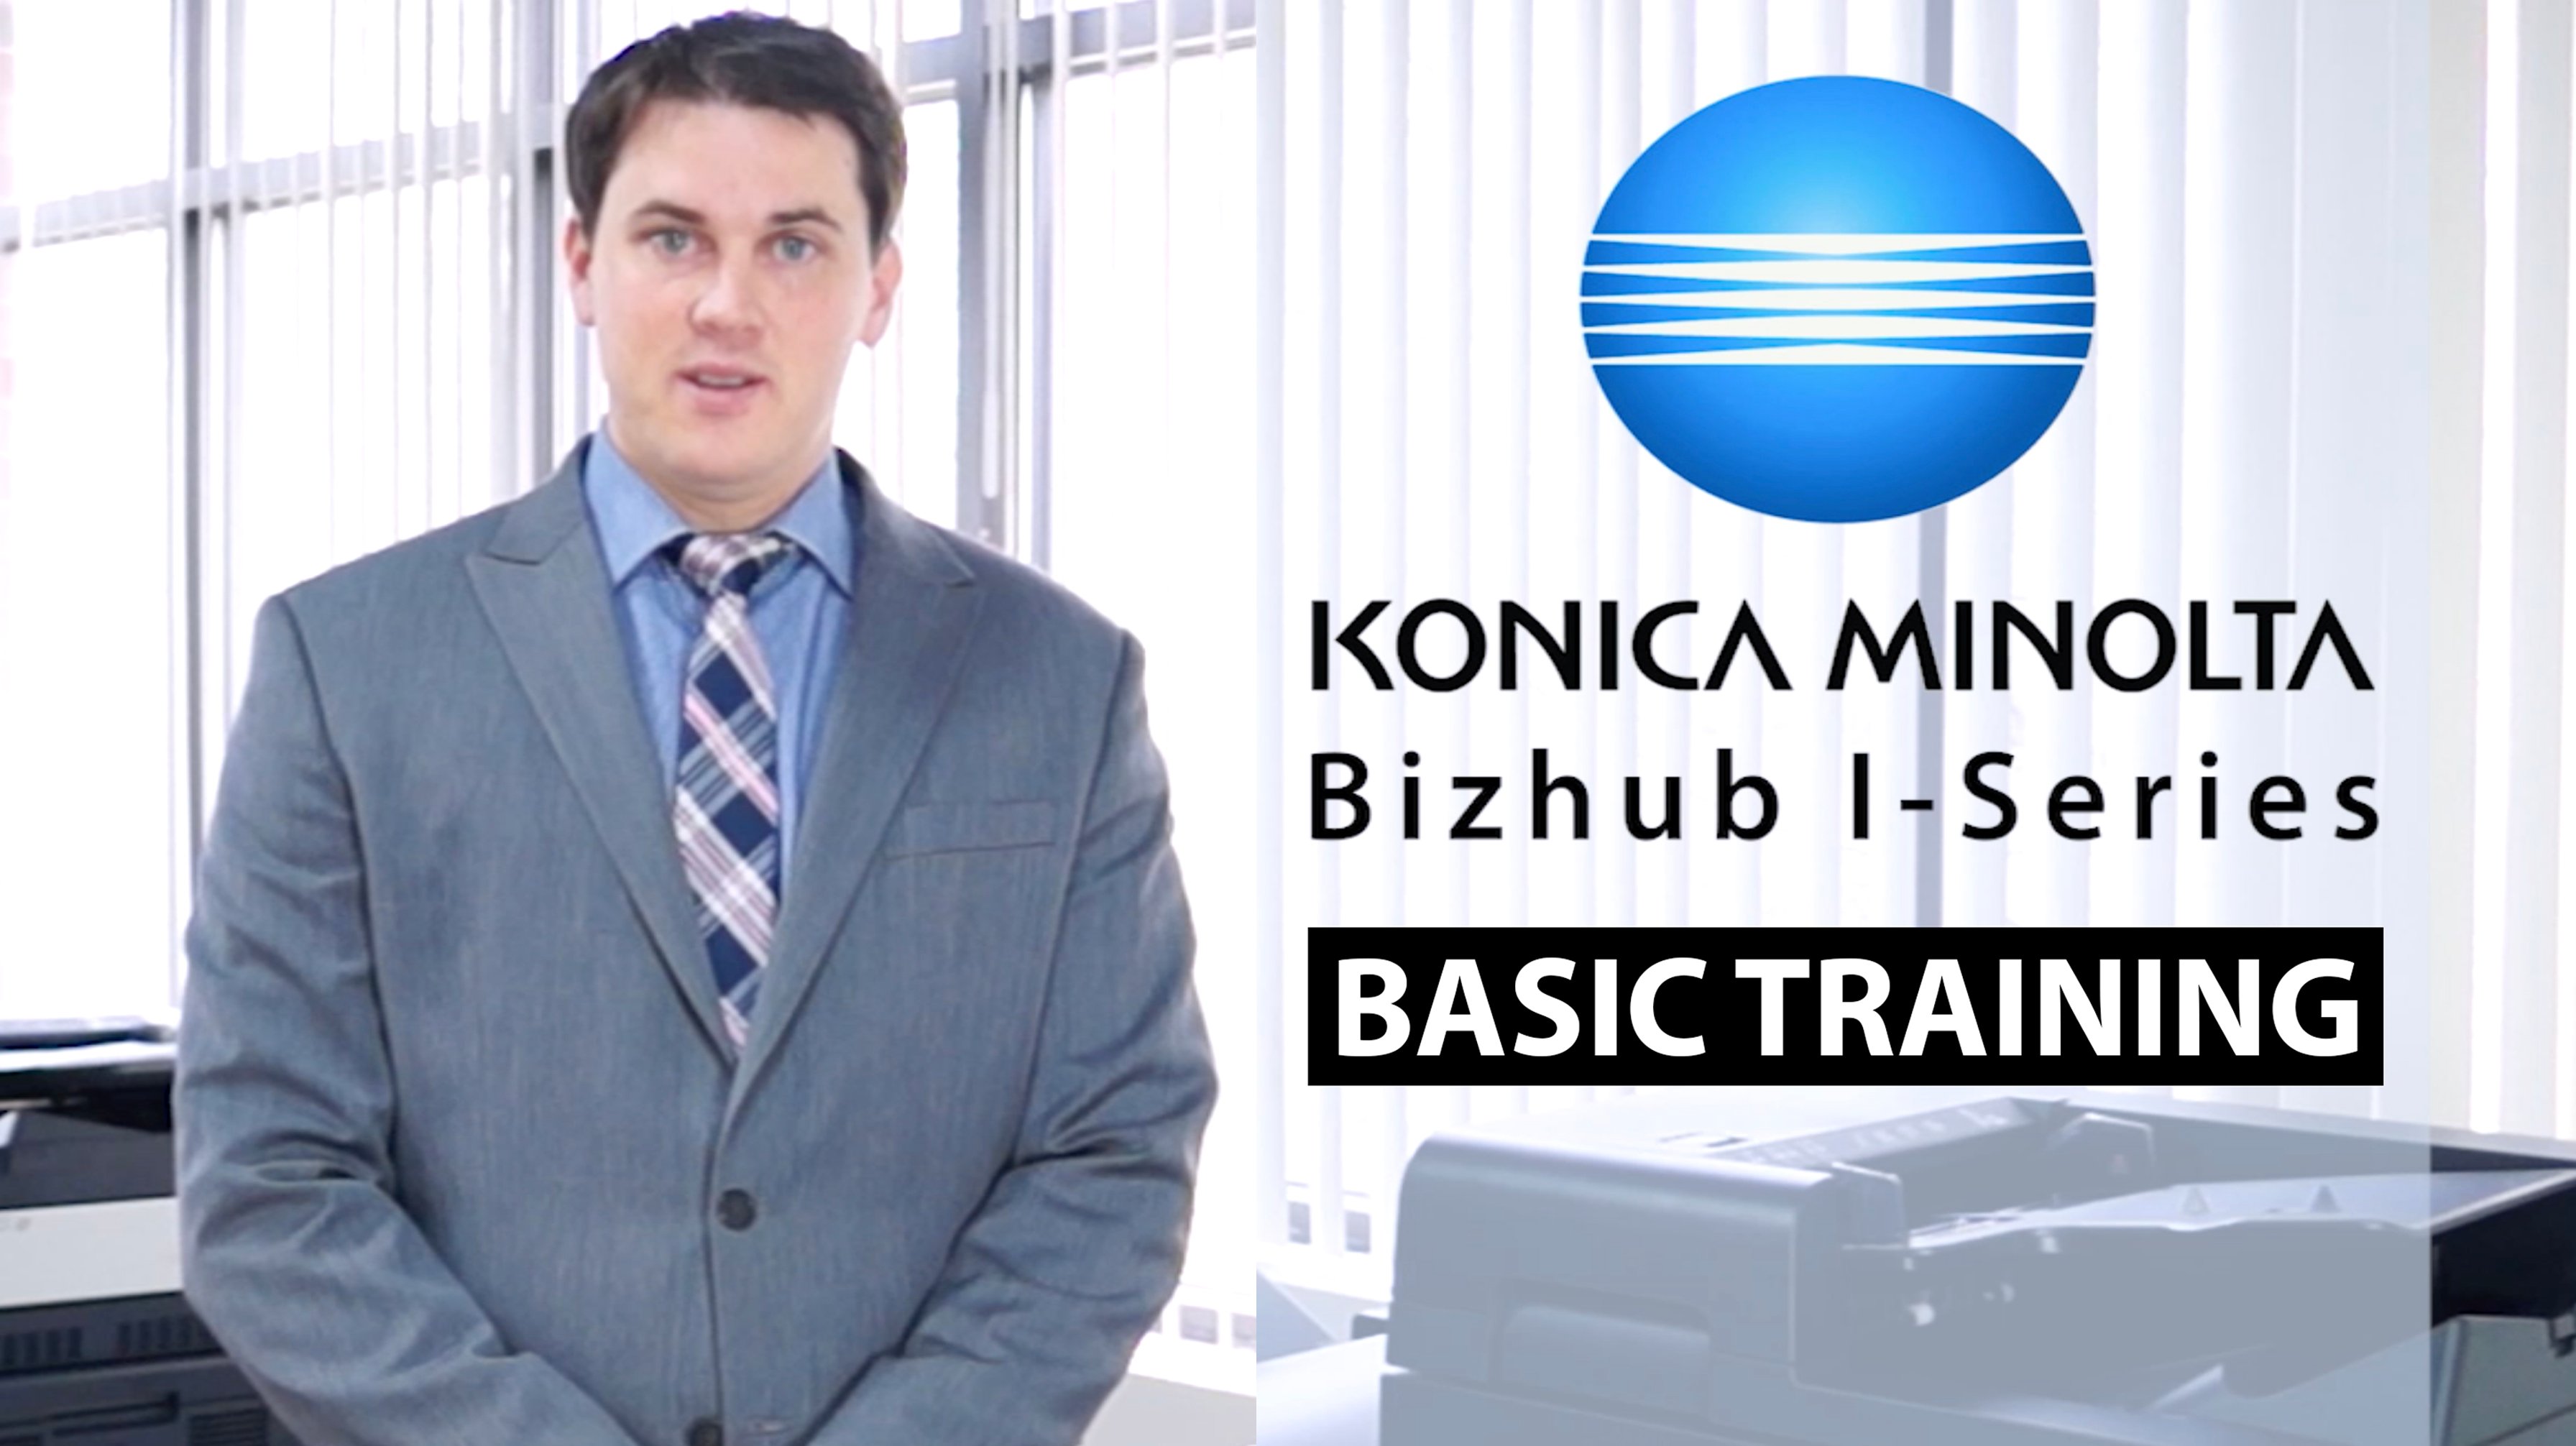 Basic Training: The Konica Minolta Bizhub i-Series